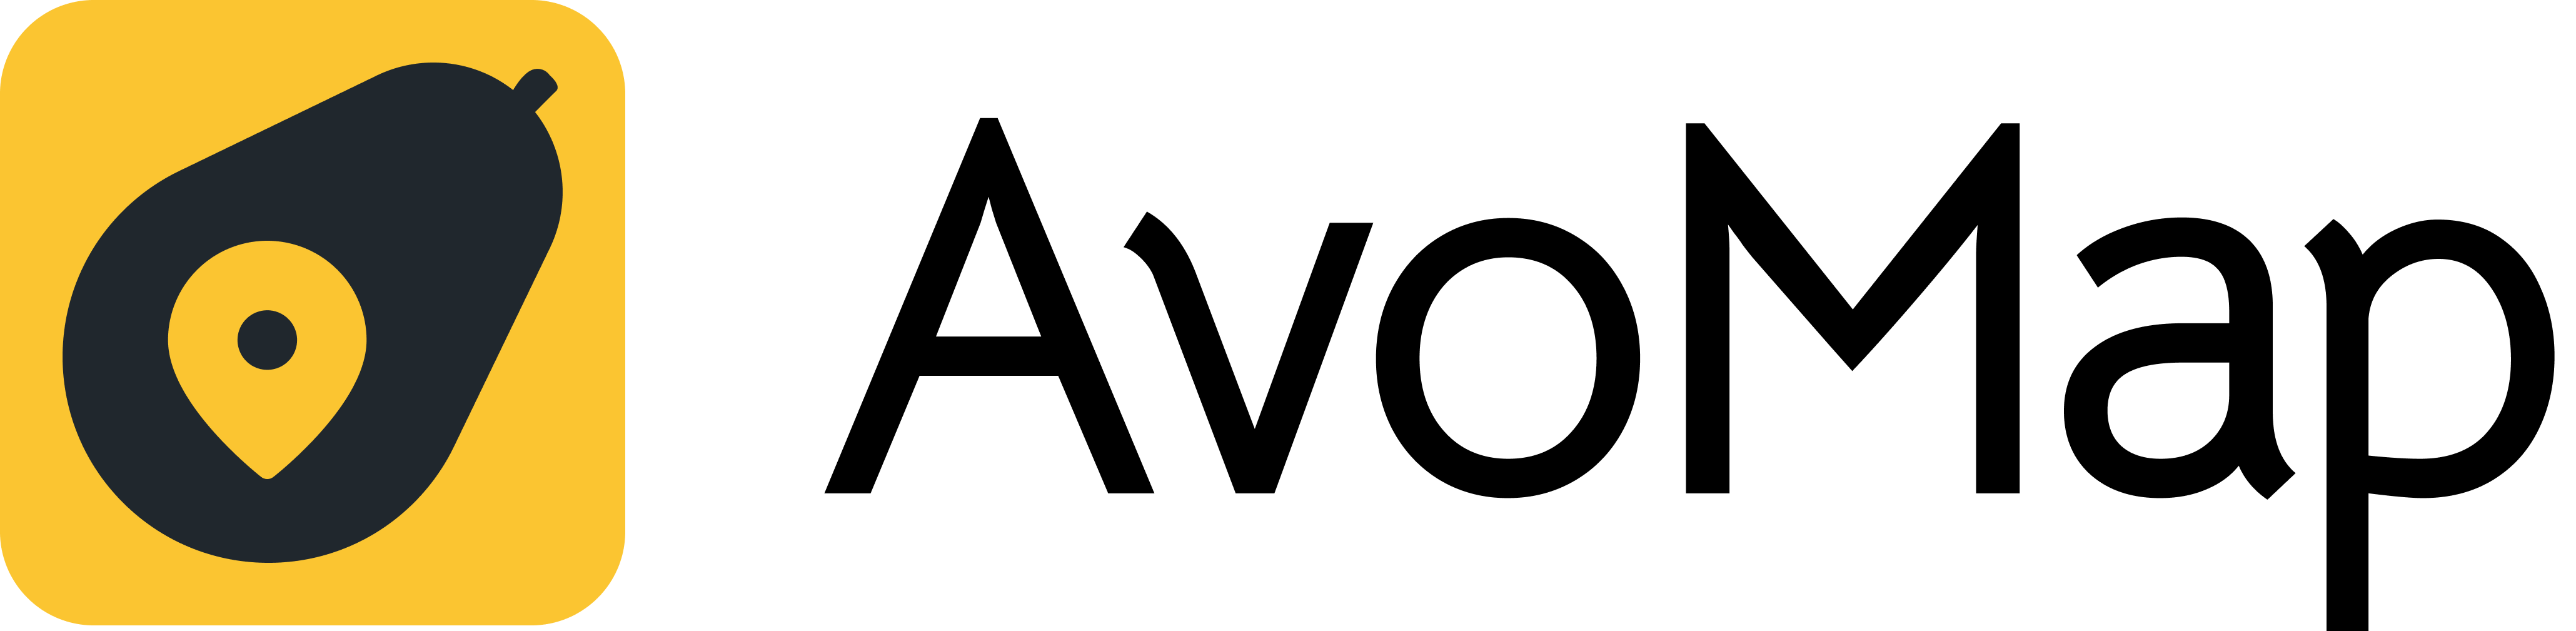 logo-avomap-with-text-dark